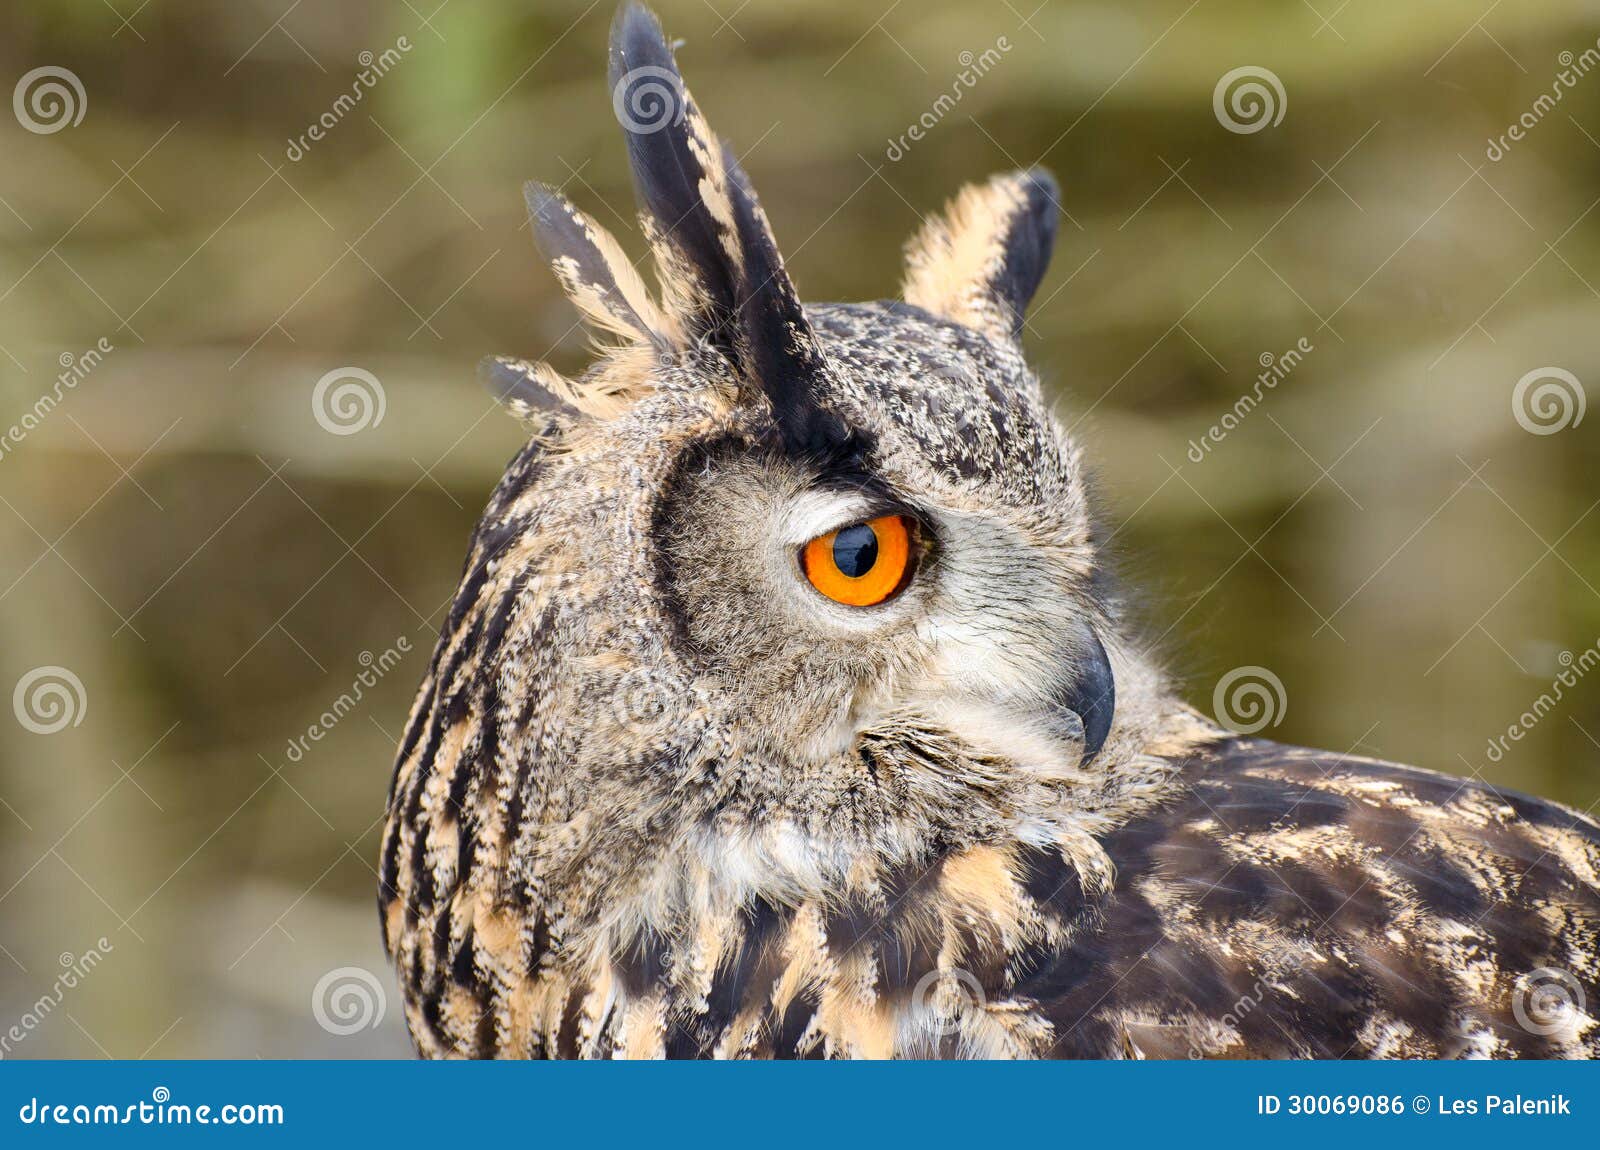 Great Horned Owl stock photo. Image of bubo, predator - 30069086